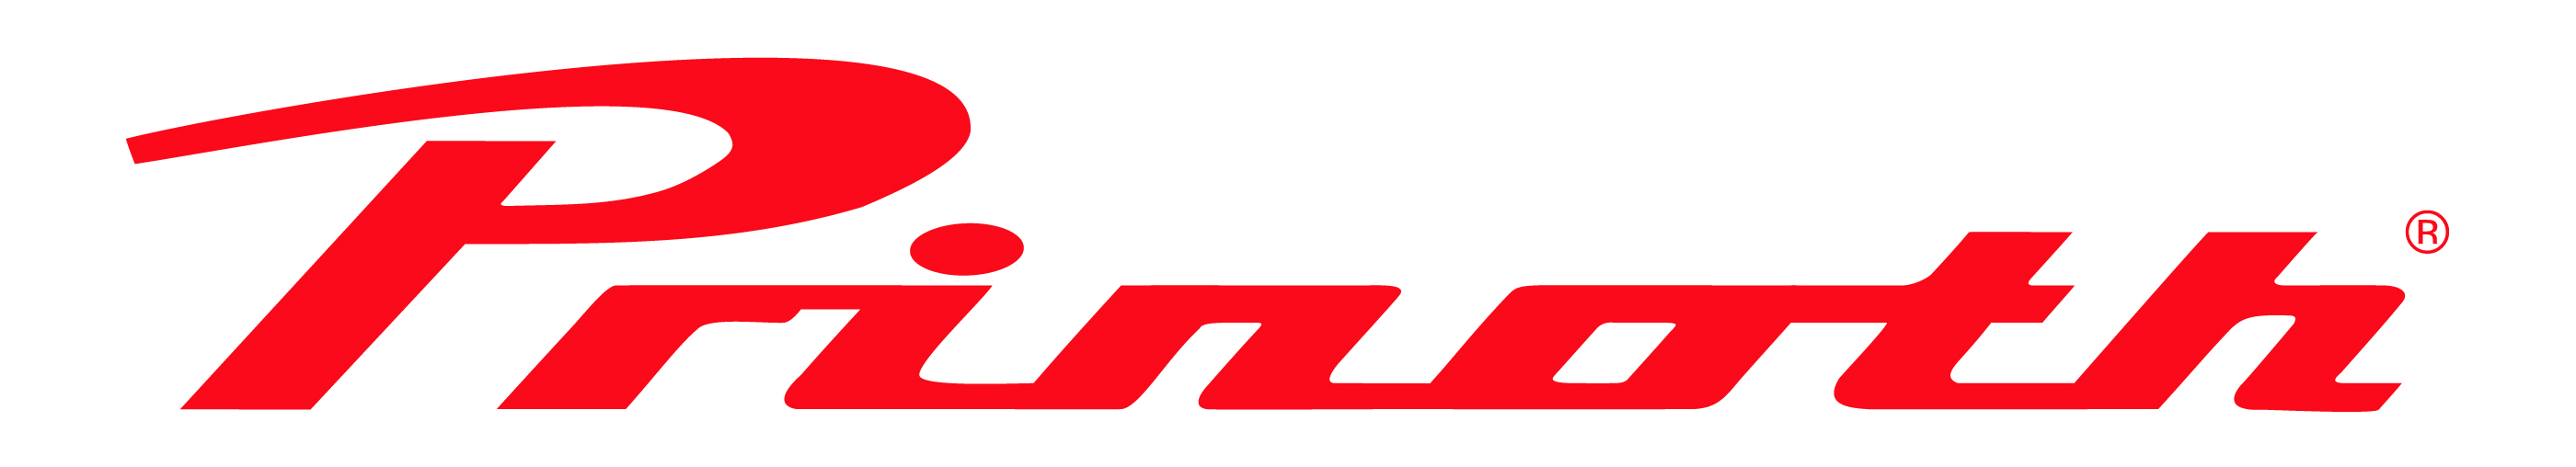 Prinoth logo